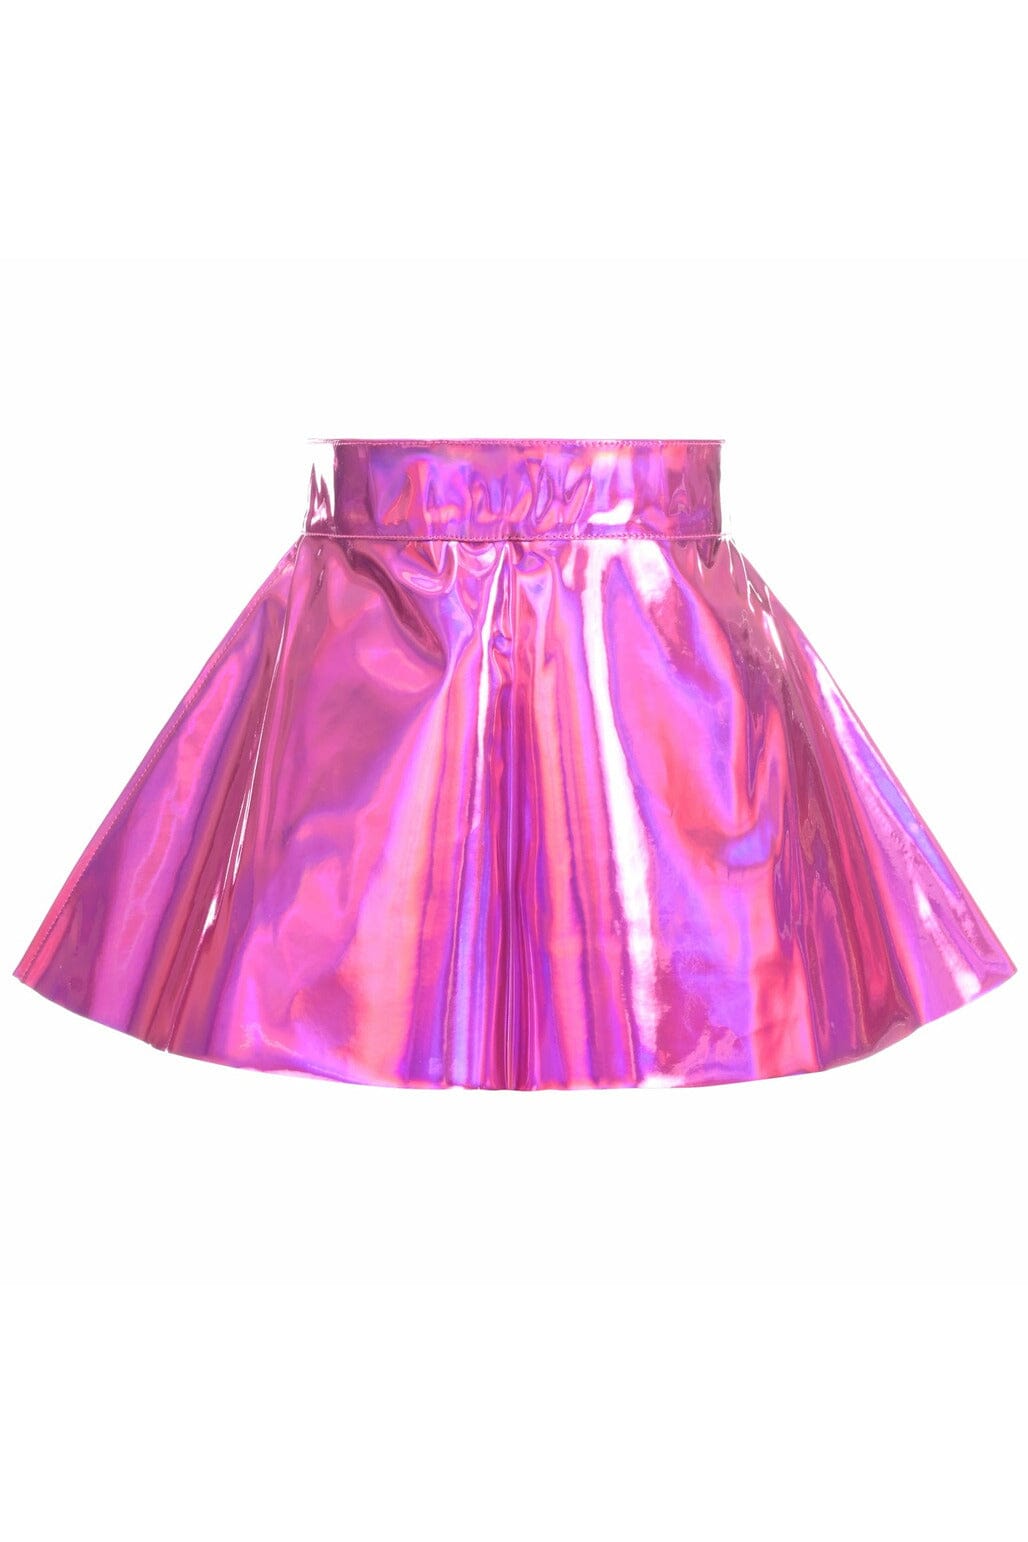 Fuchsia Holo Skater Skirt-Mini Skirts-Daisy Corsets-Hologram-S-SEXYSHOES.COM